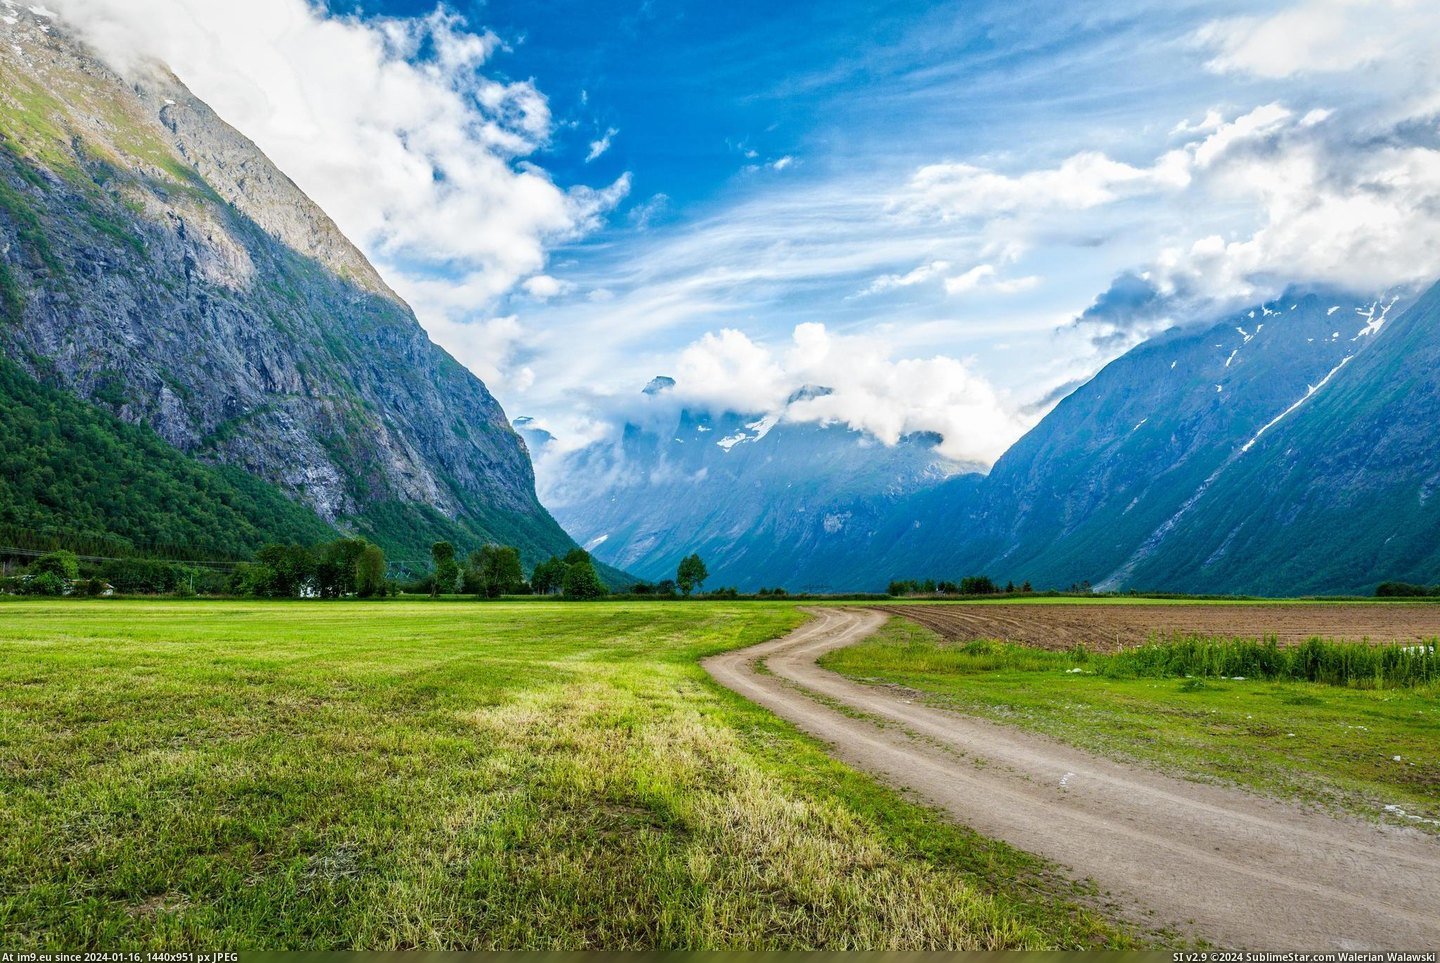 #Road #Simple #Norway [Pics] A simple road in Norway Pic. (Bild von album My r/PICS favs))